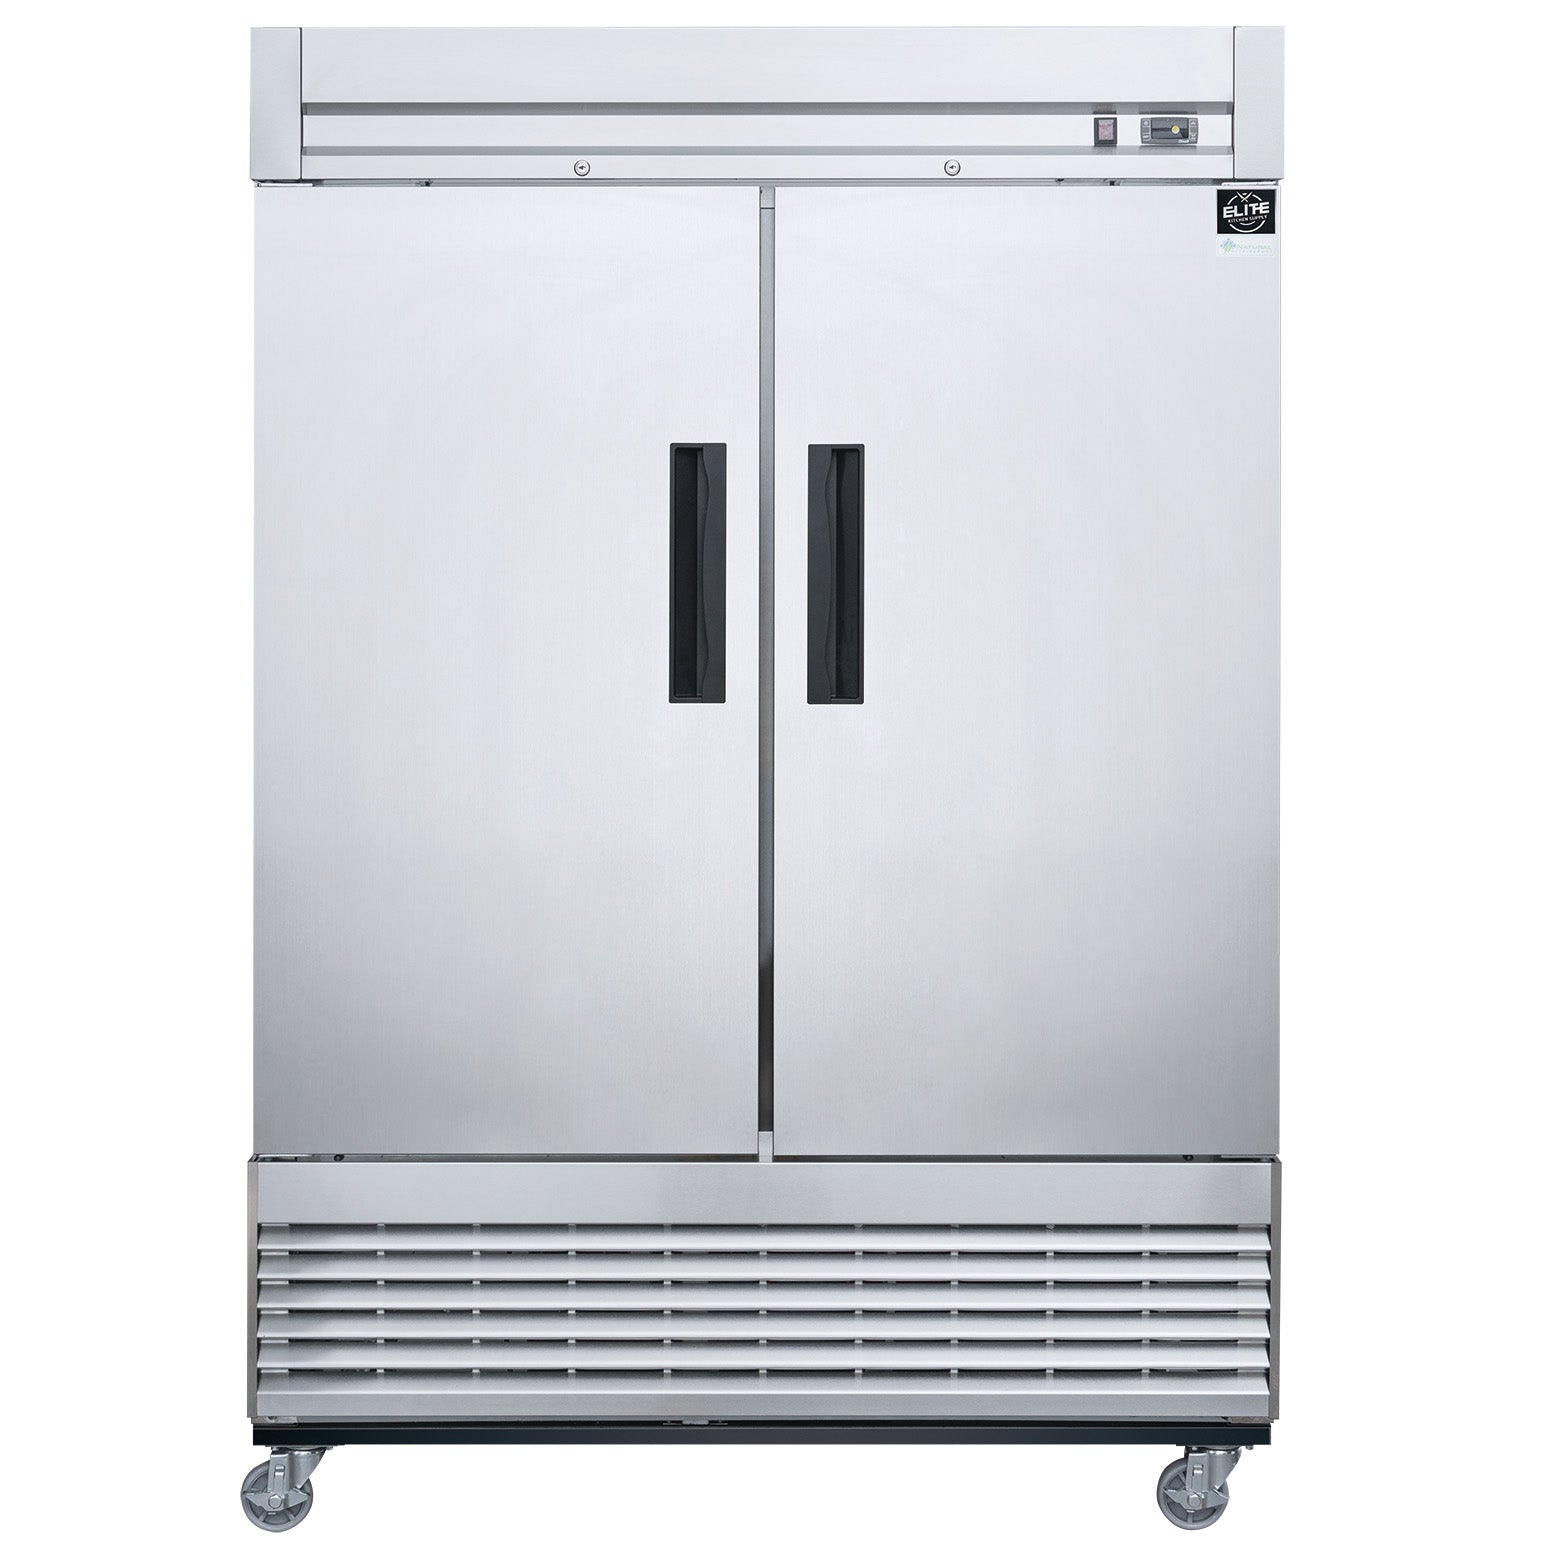 EUC60R 2-Door Undercounter Commercial Refrigerator – Elite Kitchen Supply